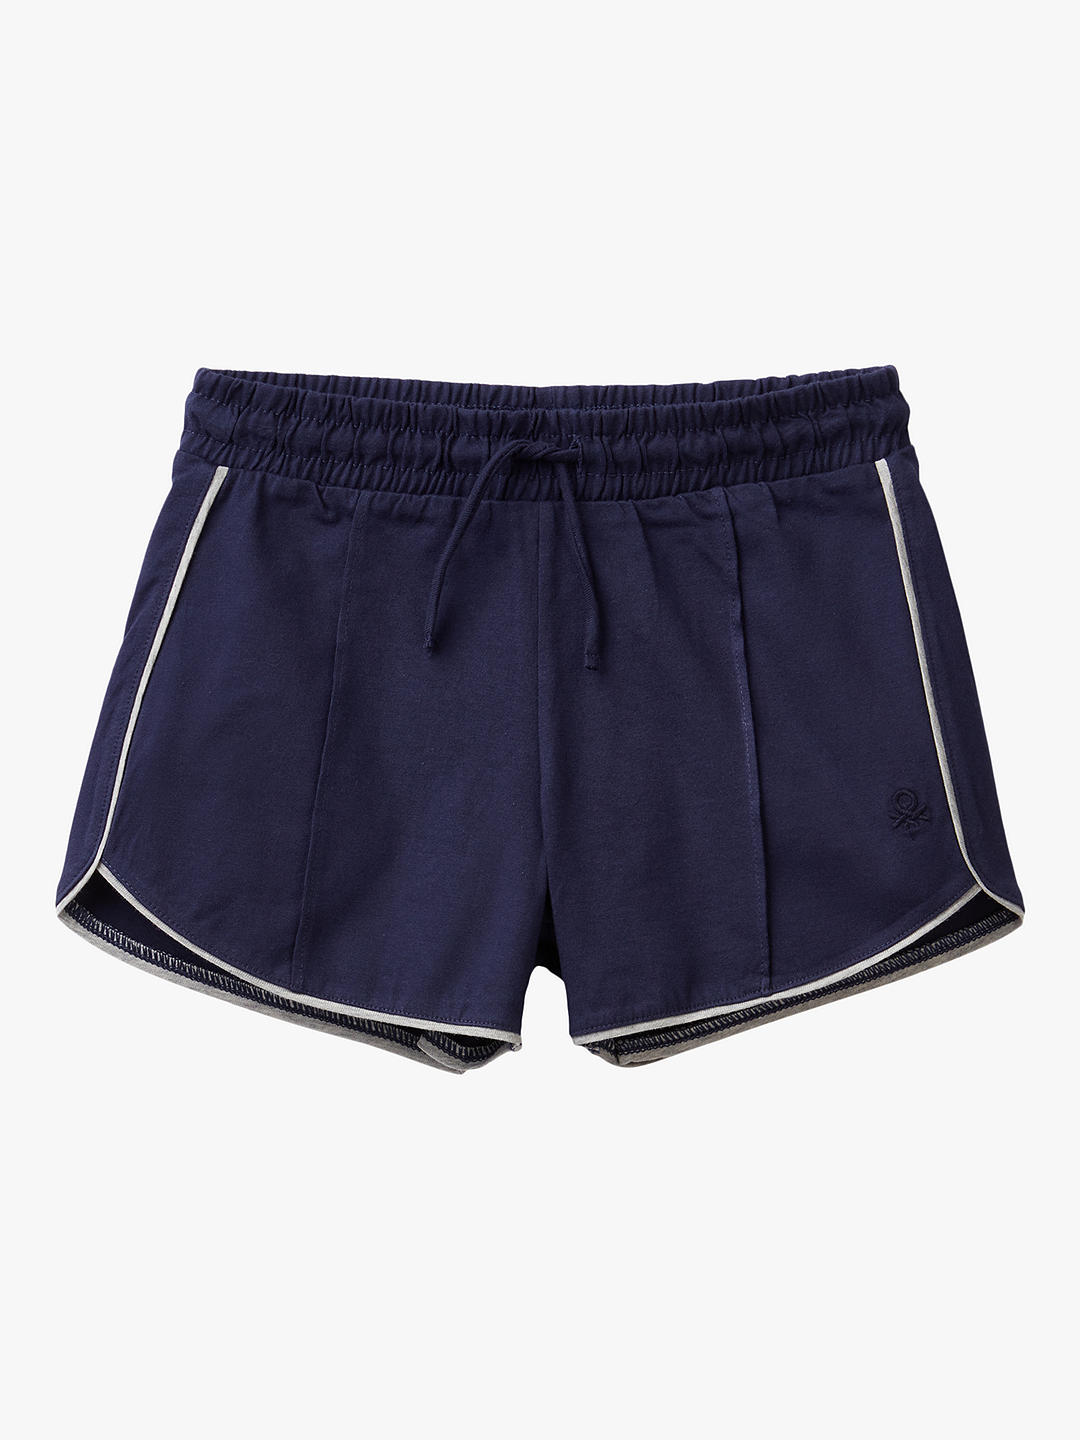 Benetton Kids' Sweat Shorts, Night Blue